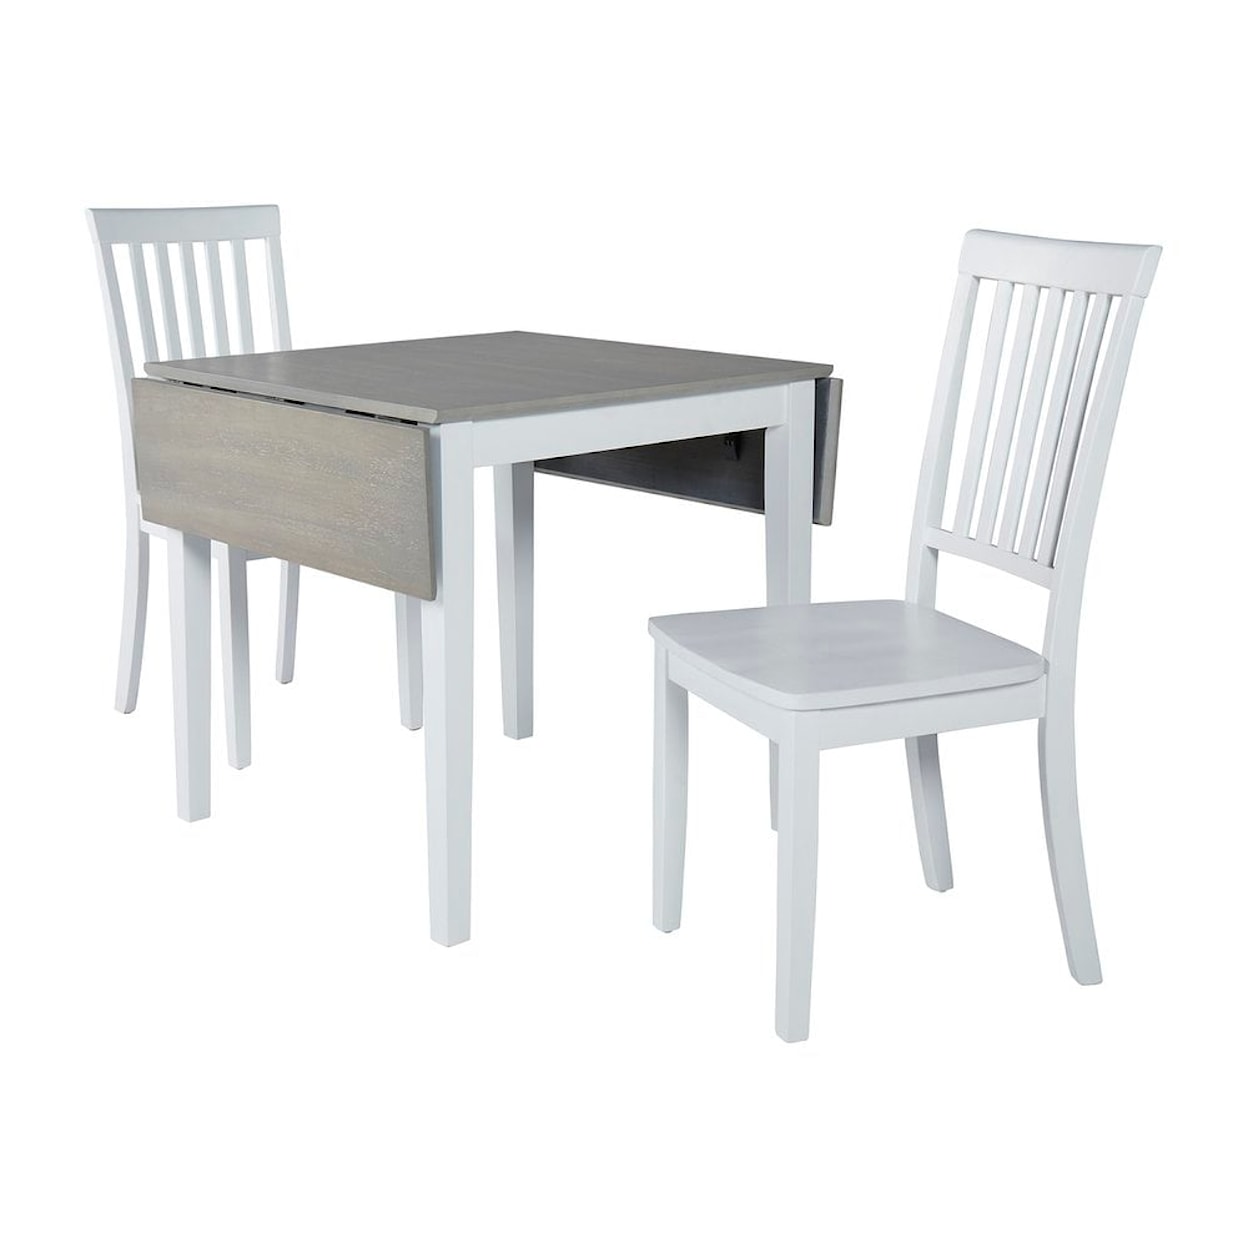 Progressive Furniture Simplicity Dining Chair